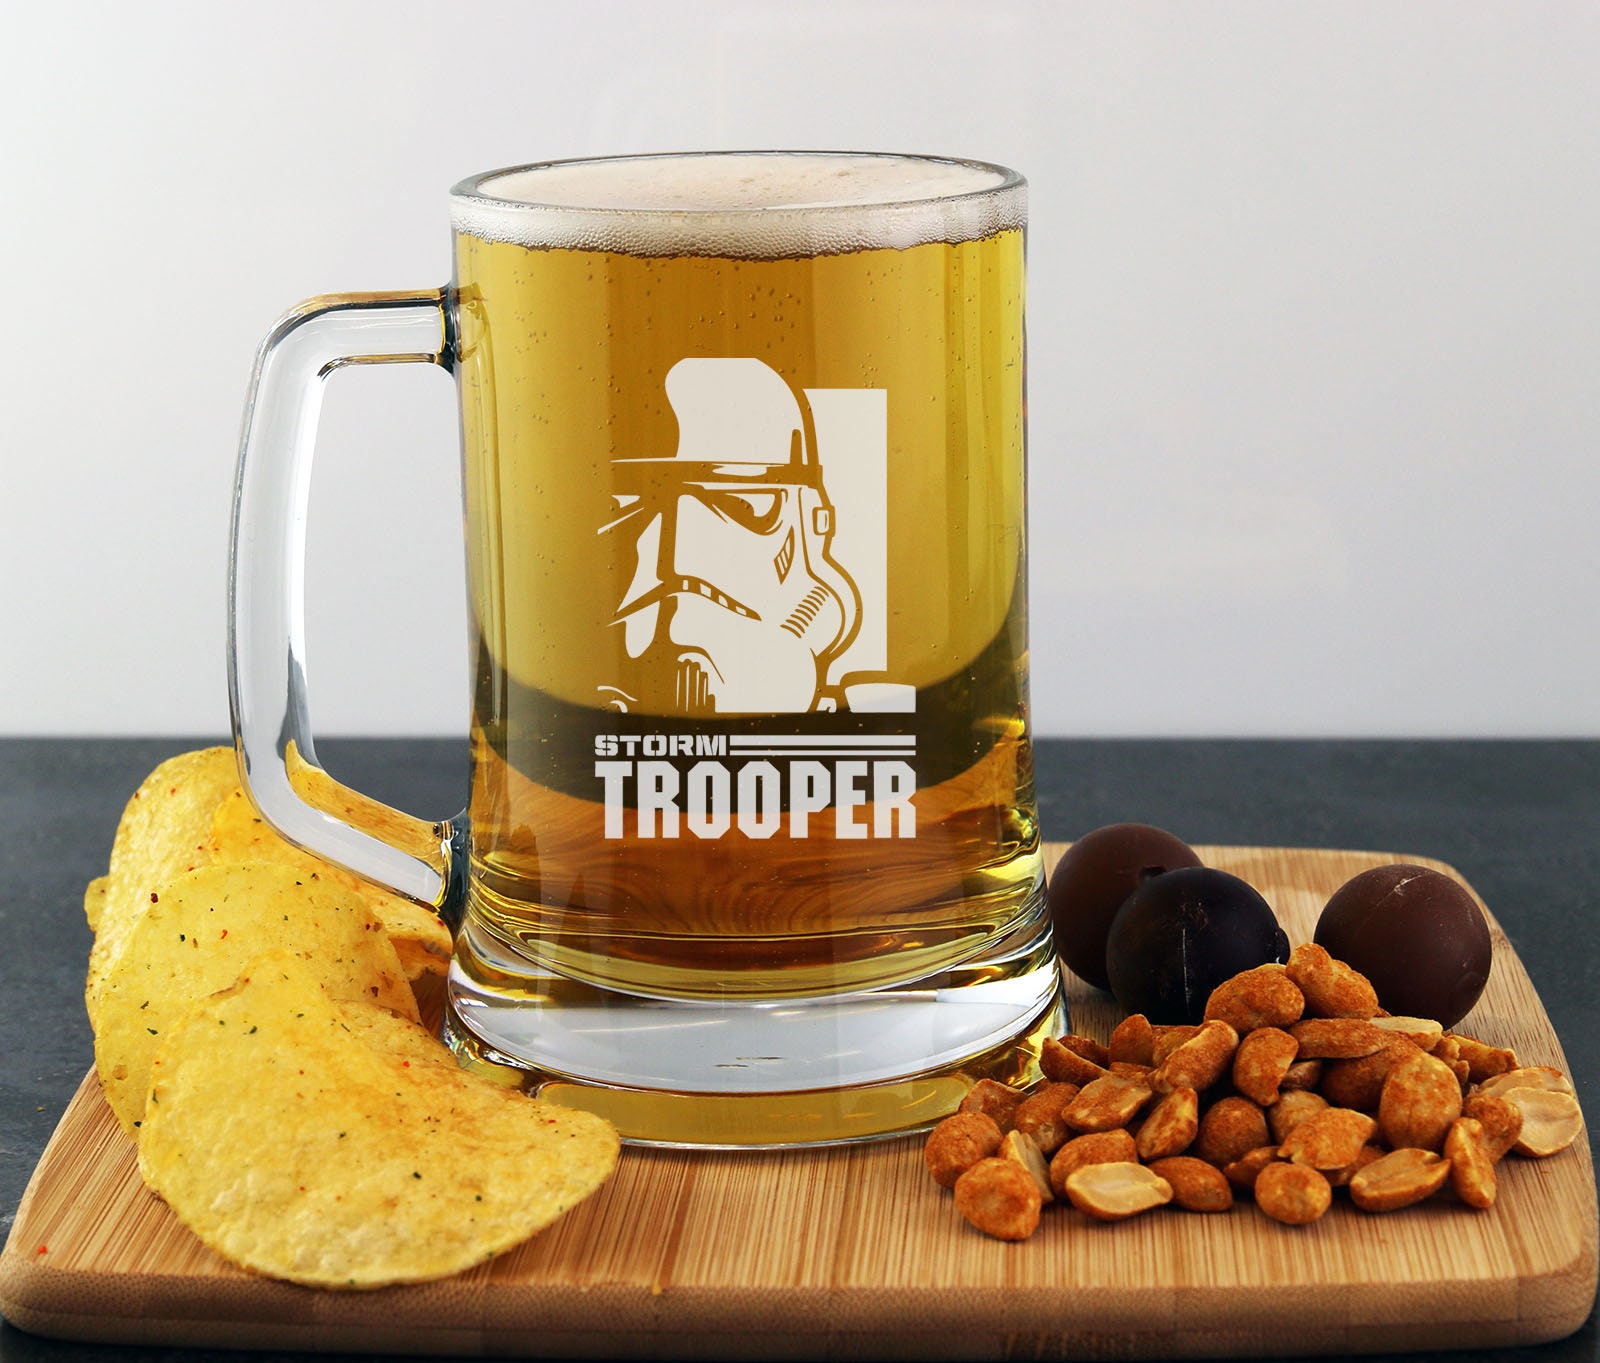 Beer Pint Glass - Star Wars - Stormtrooper